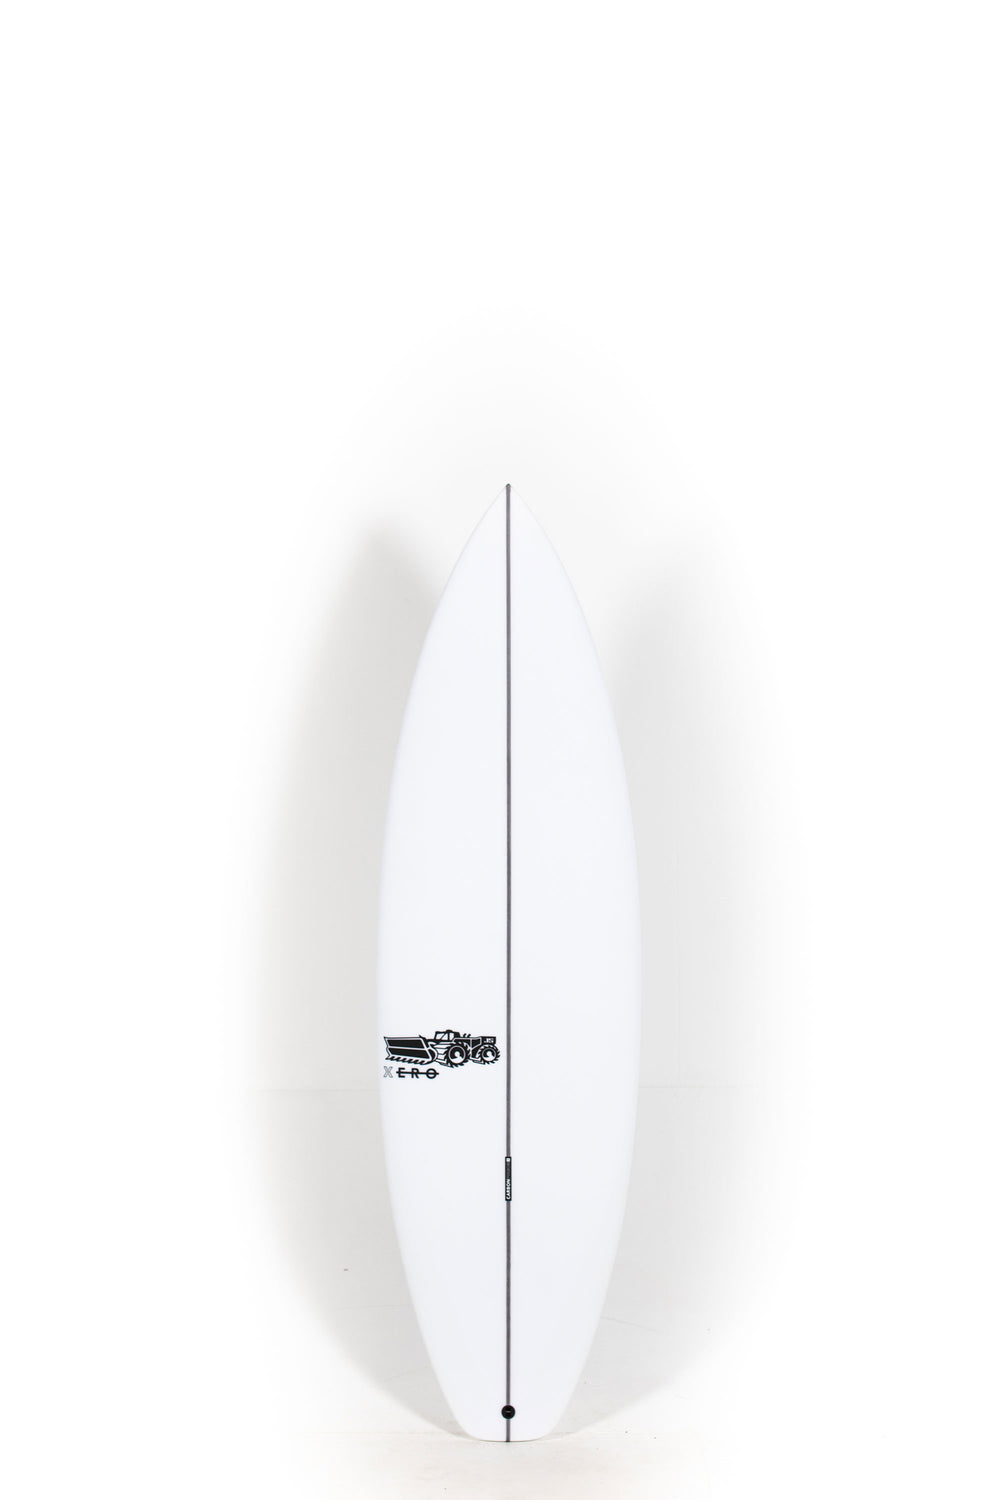 Pukas Surf Shop - JS Surfboards - XERO - 5'11